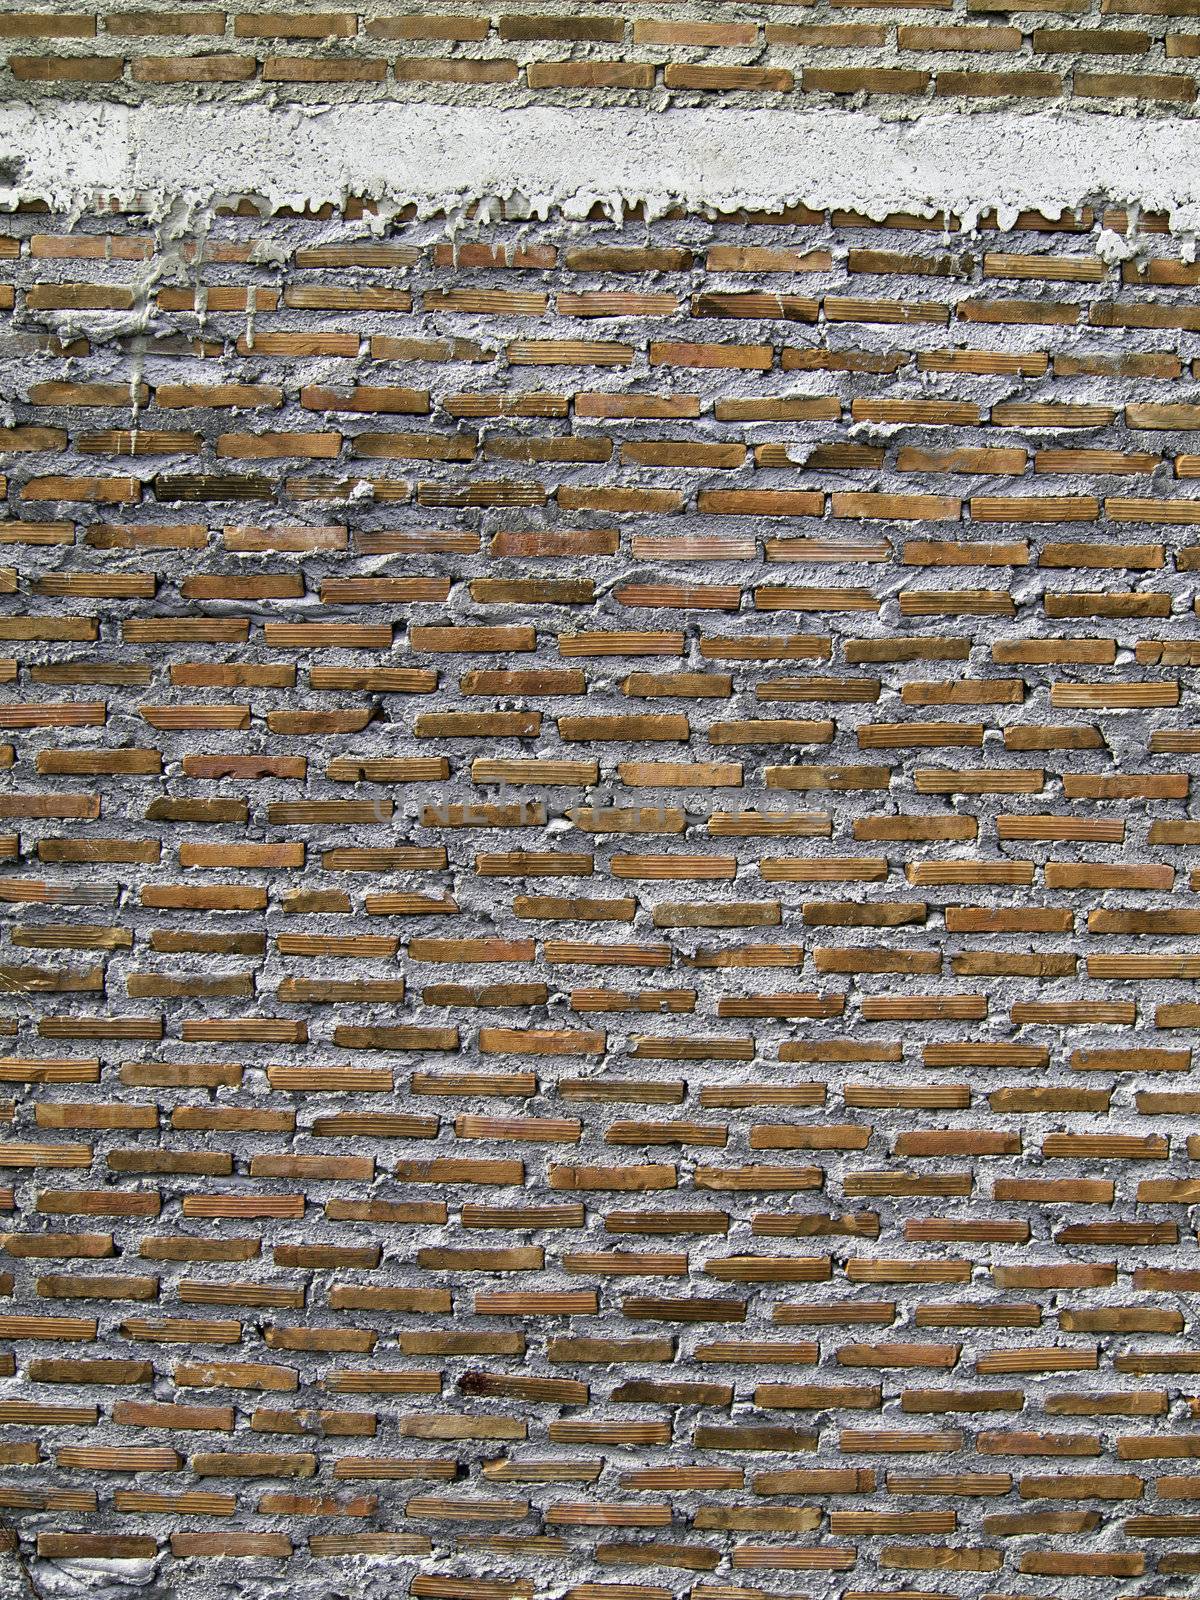 Red BrickWall Texture / Background, under construction